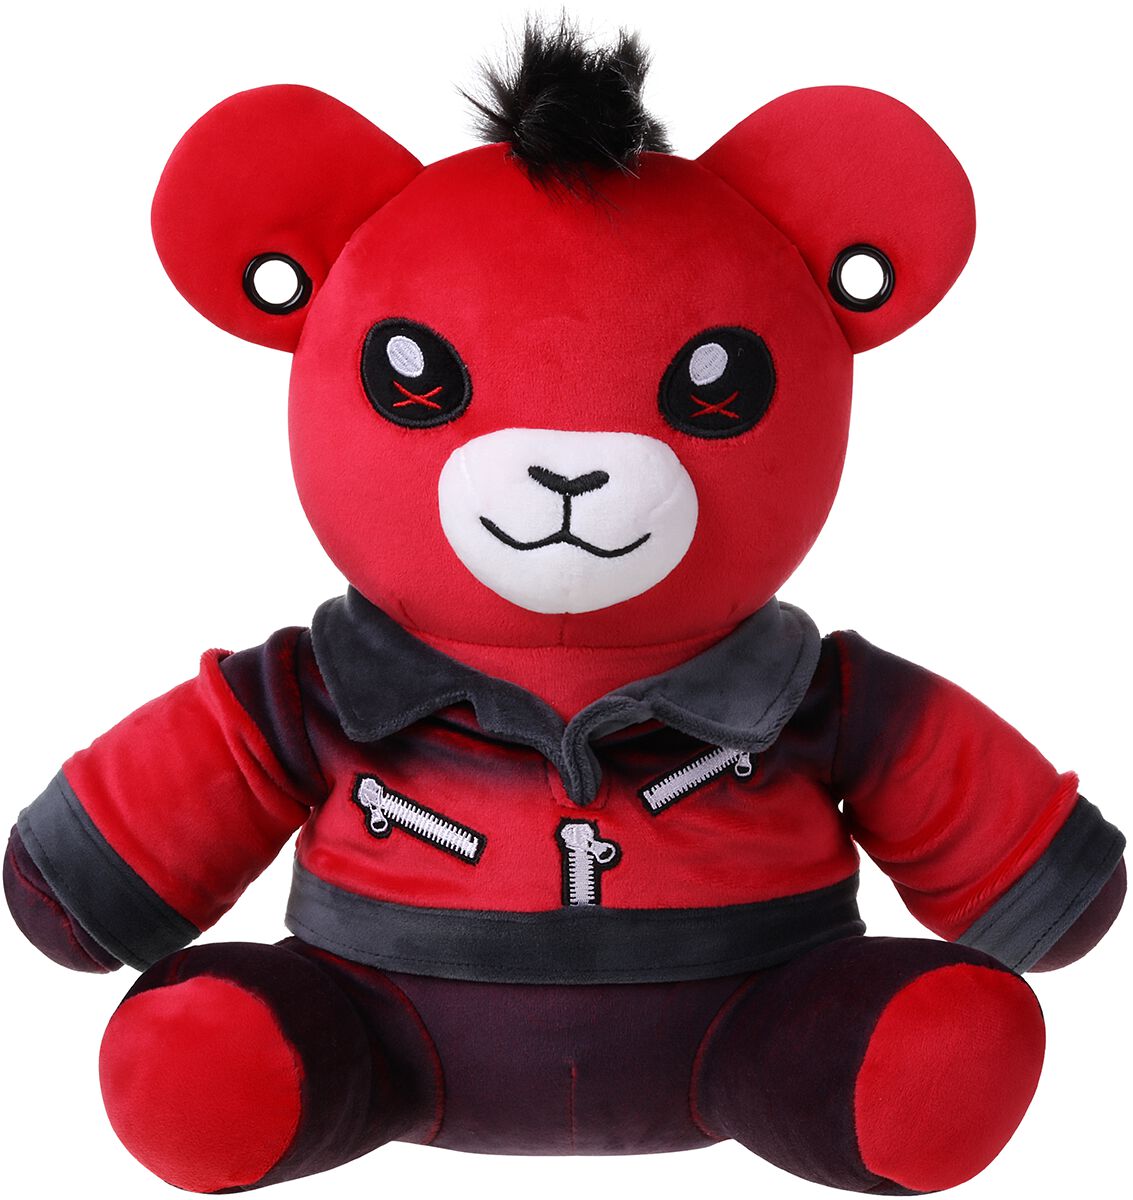 Corimori Ember the Punk Teddy Stuffed Figurine red